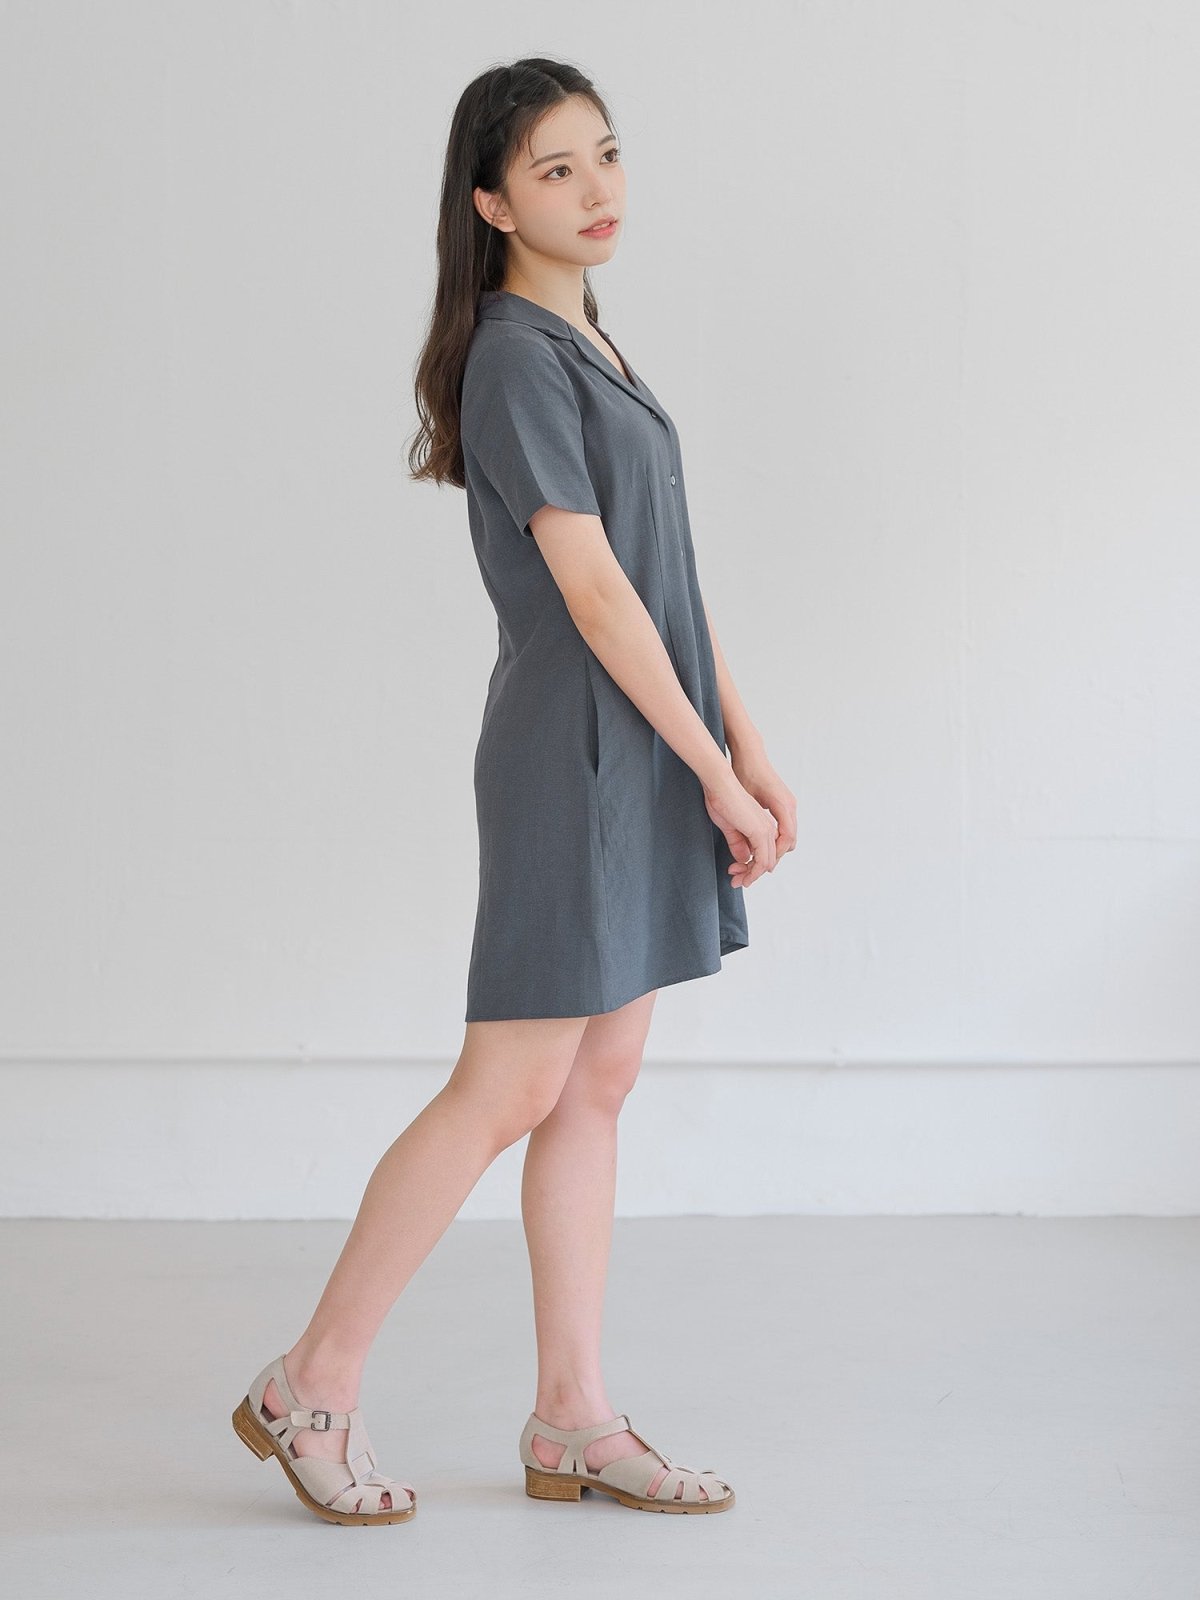 Levi Notch Collared Mini Dress - DAG-DD9450-22IndigoF - Indigo - F - D'ZAGE Designs